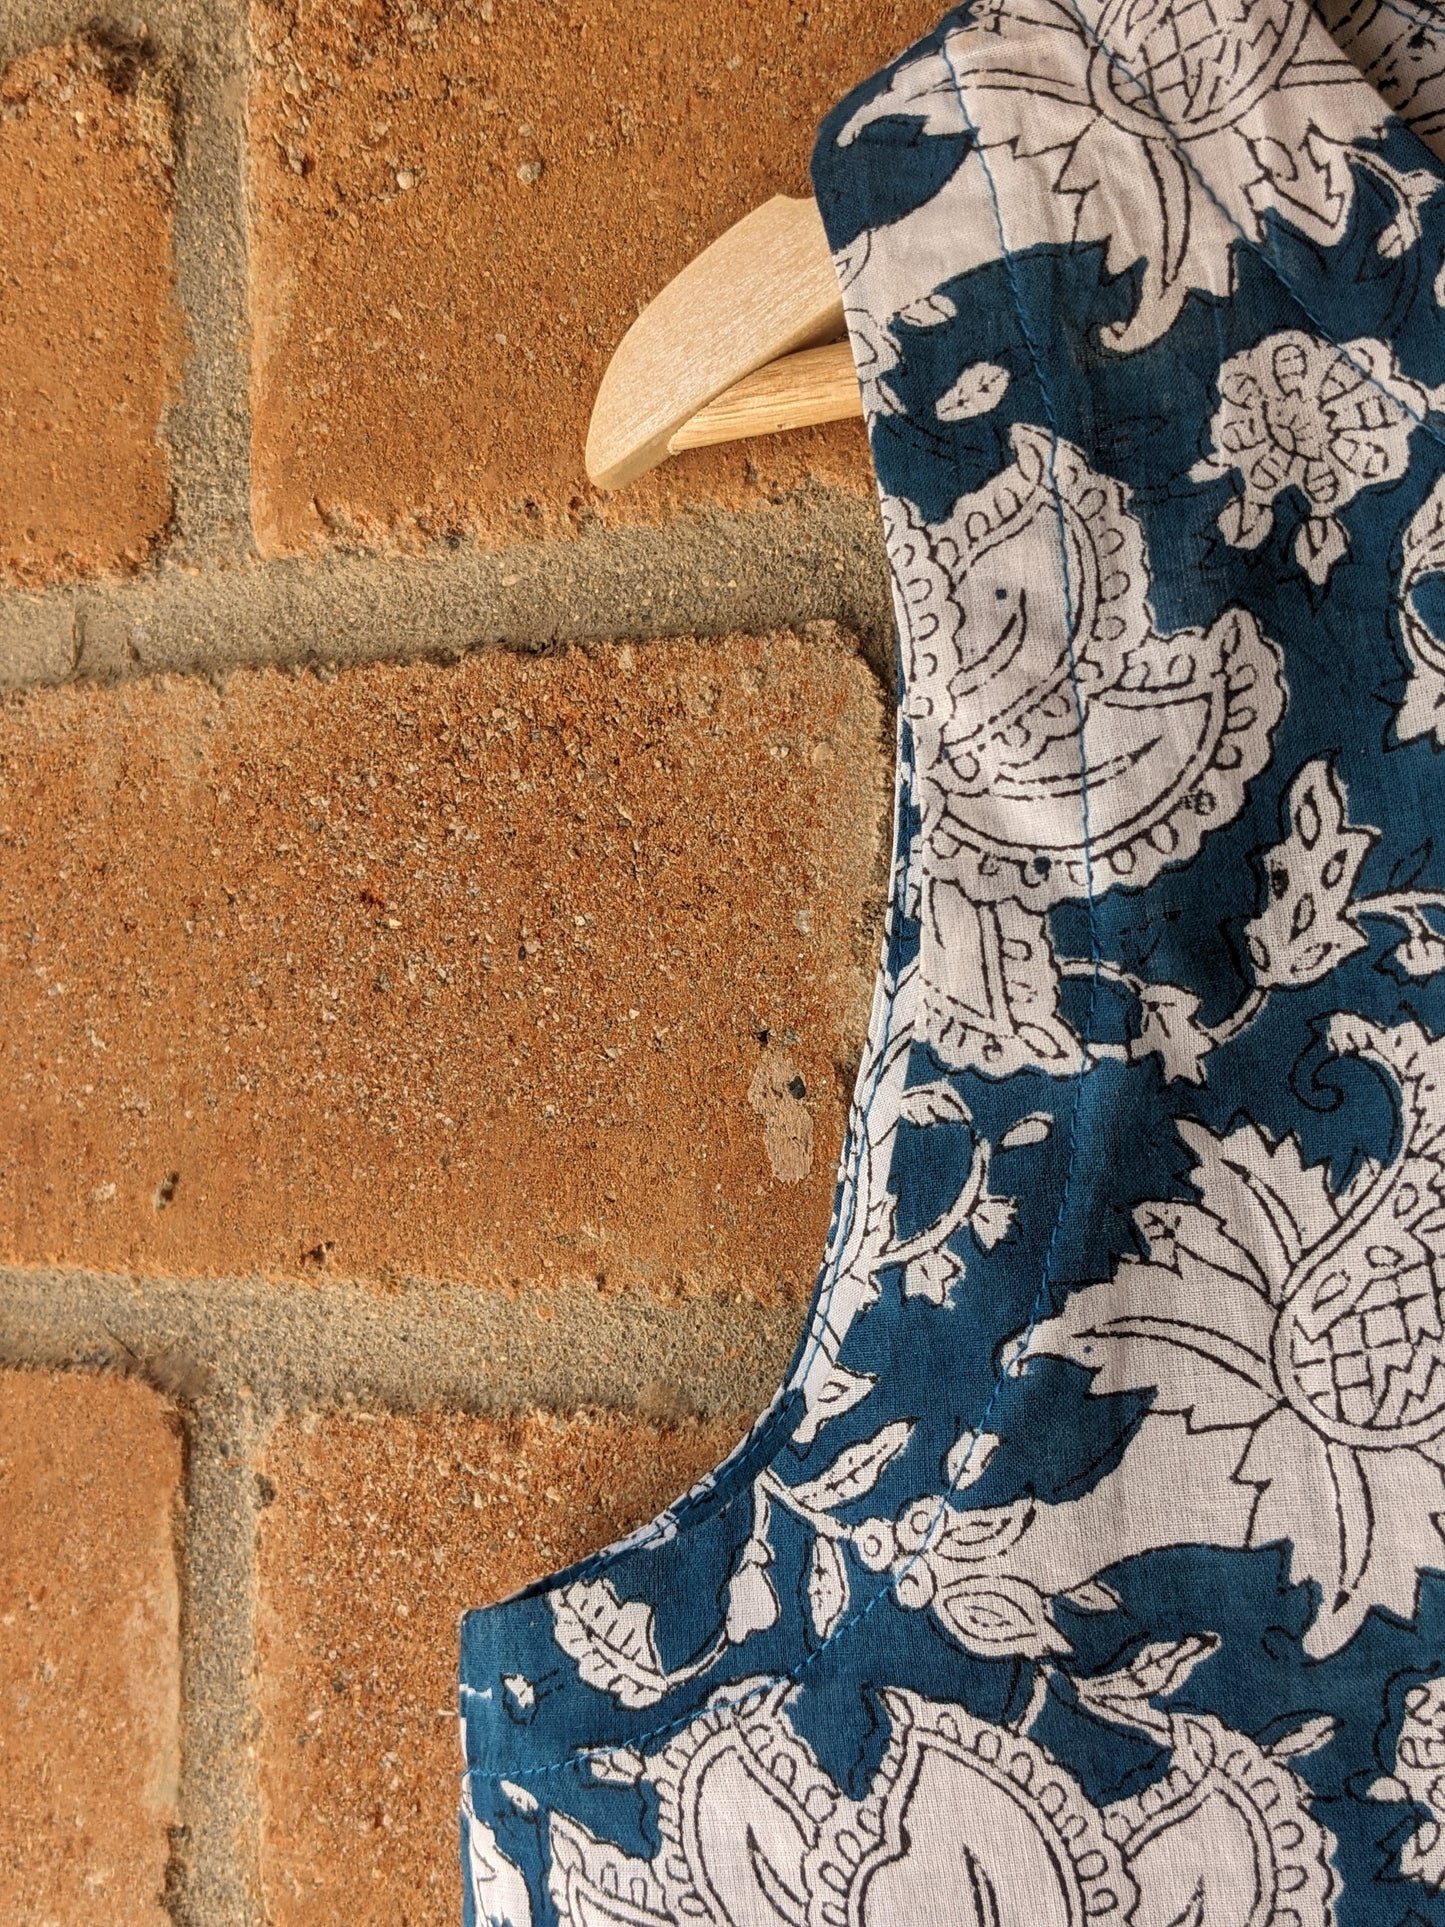 Women's Cotton Sleeveless Top - Block Print - Blue & White - Closeup Image